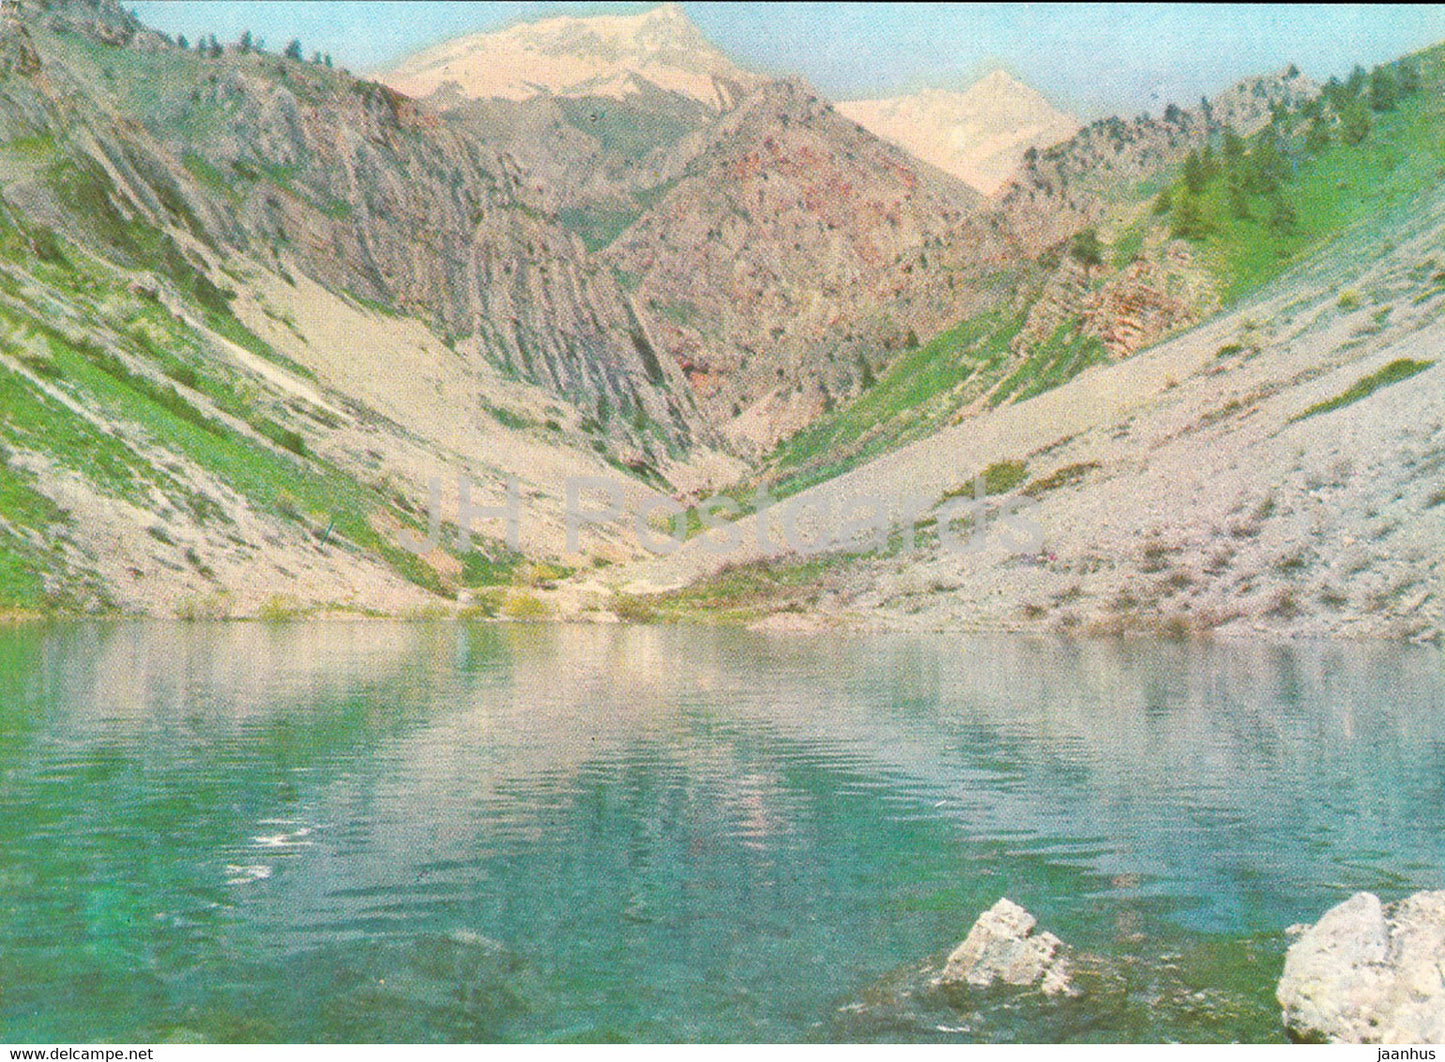 Ayaryk mountain lake - Nature Trails - 1981 - Uzbekistan USSR - unused - JH Postcards